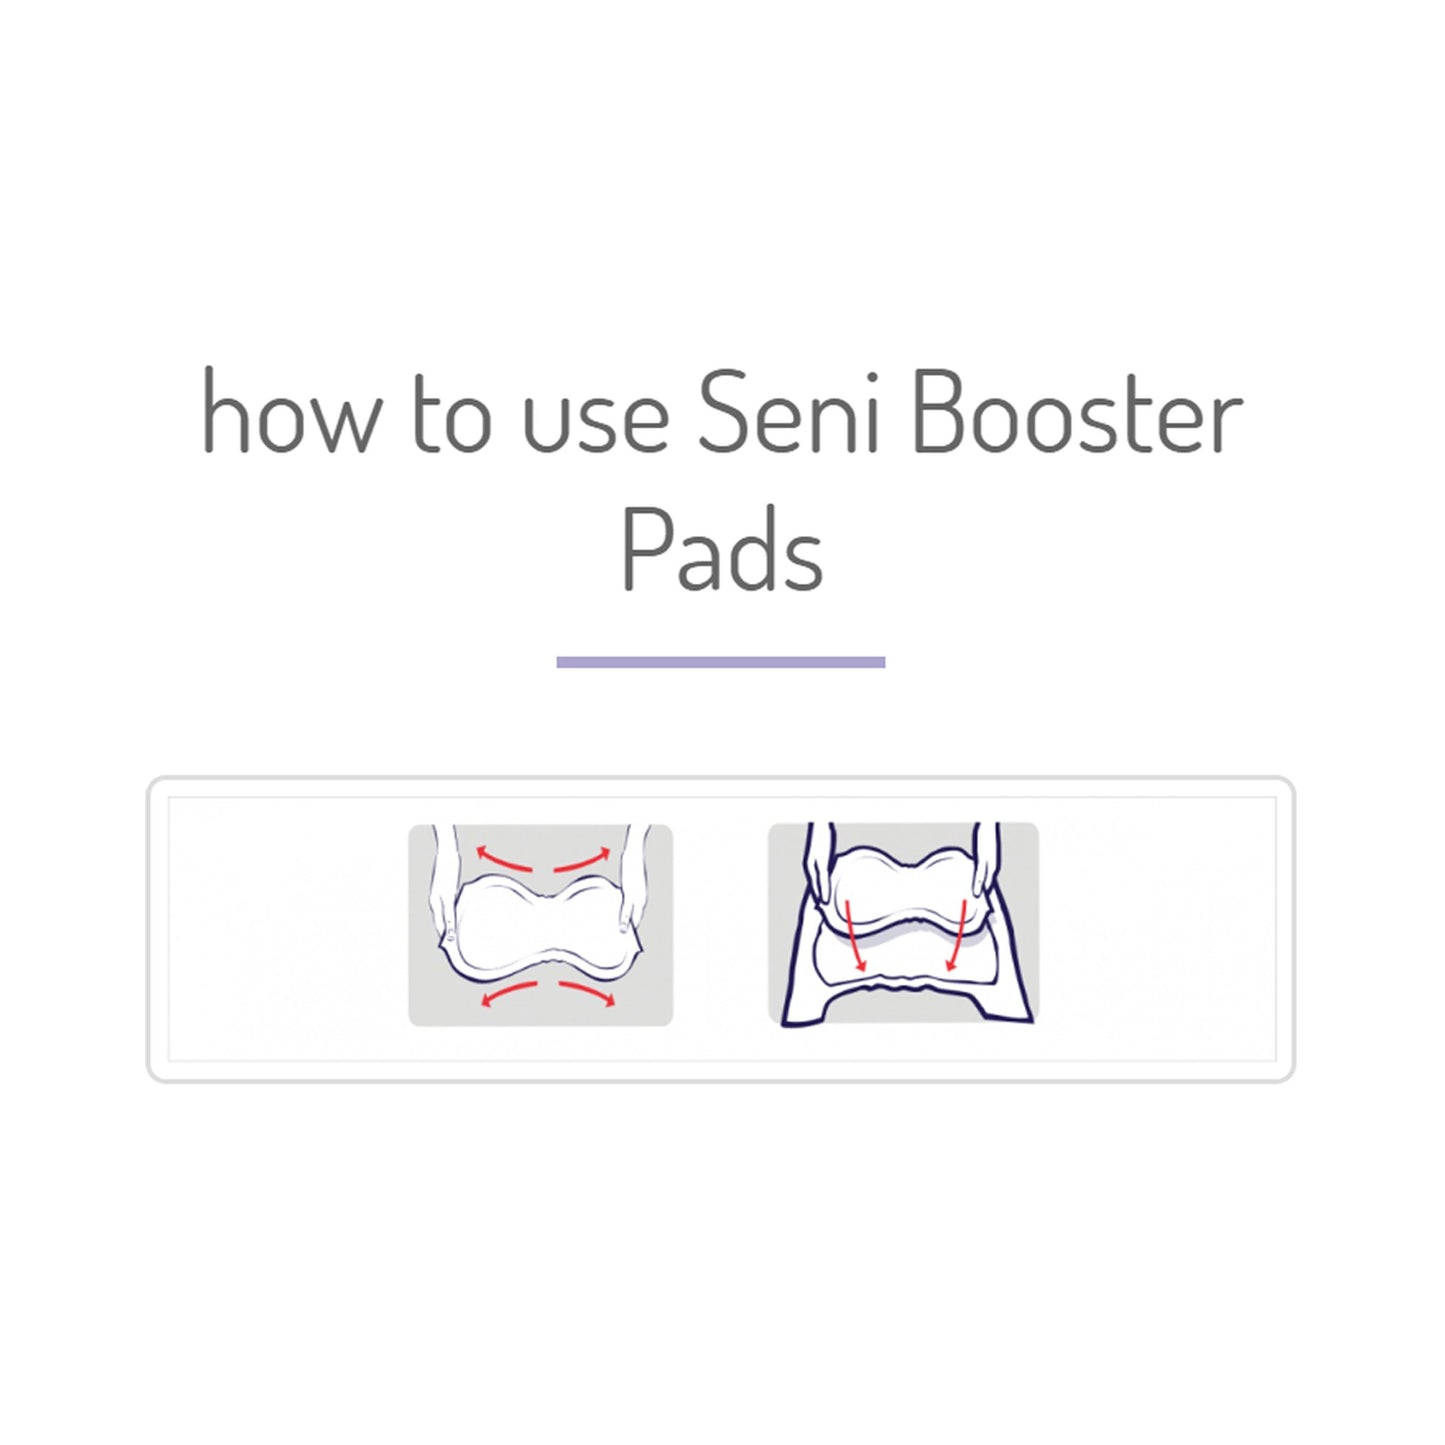 Seni® Booster Pad, 25-Inch Length, 30 ct